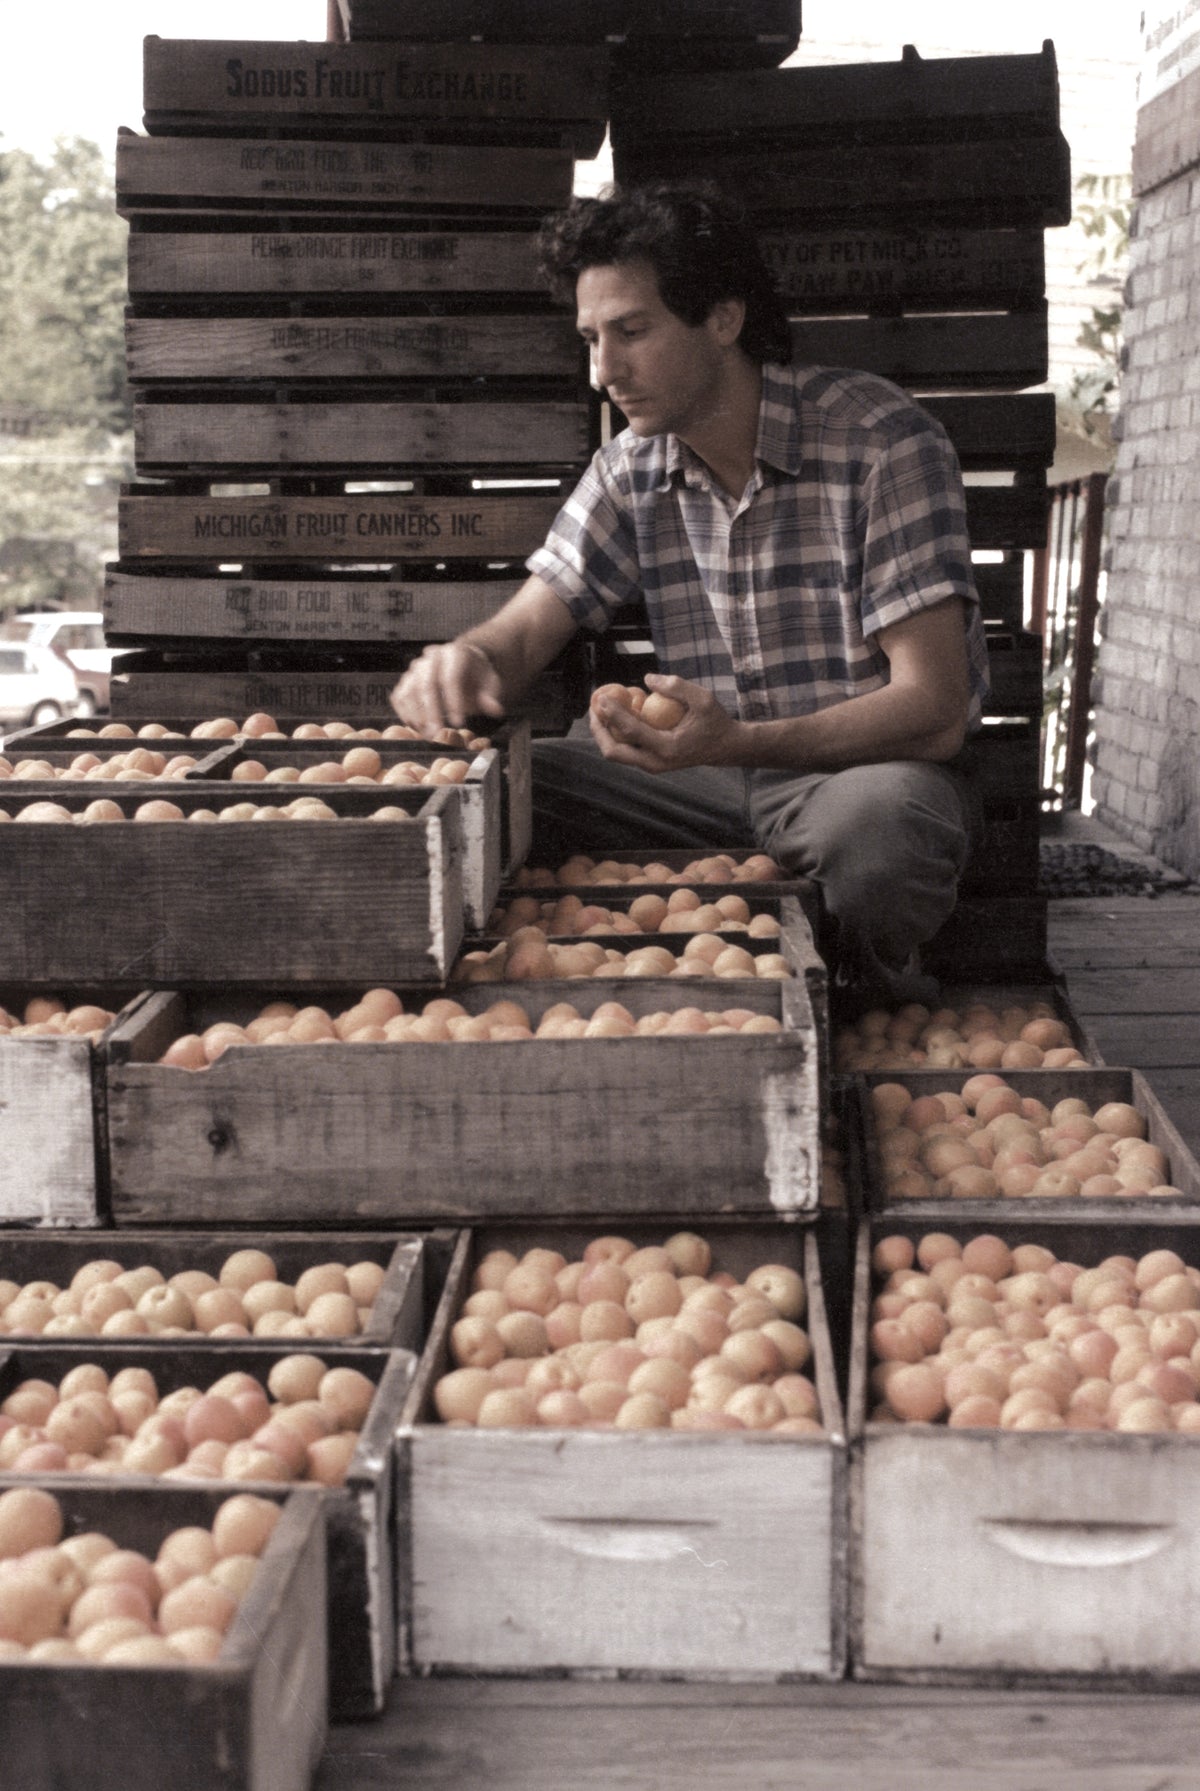 Justin Rashid sorting through bushels of apricots